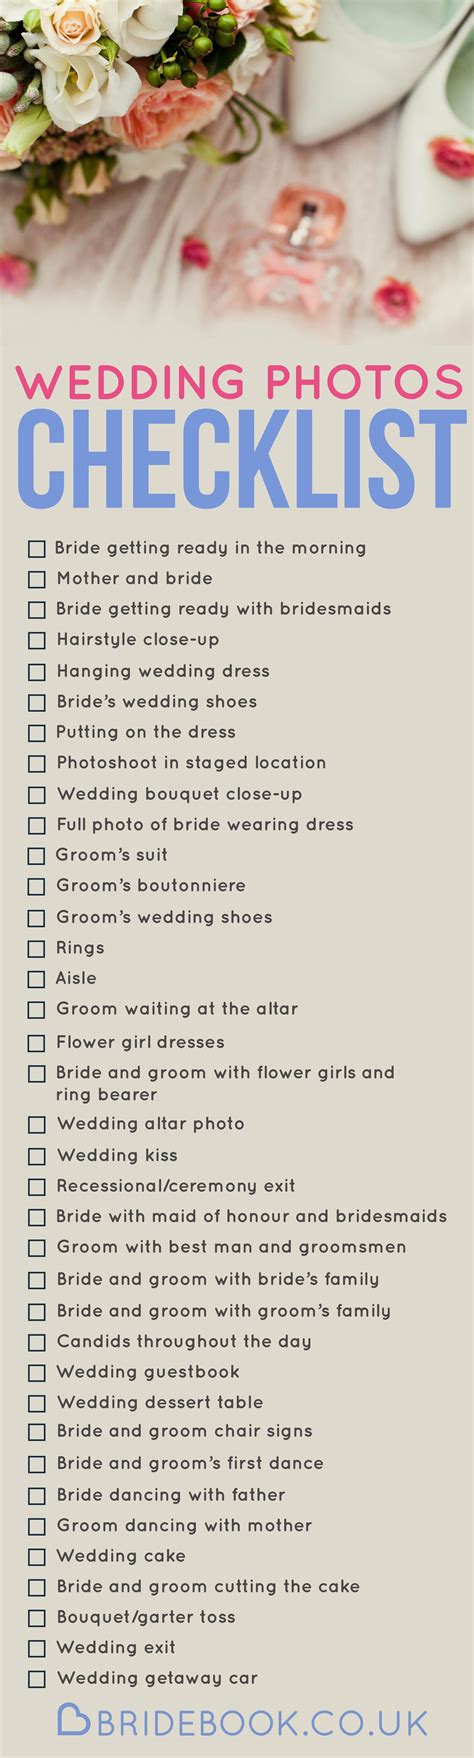 Editable Wedding Checklist Template